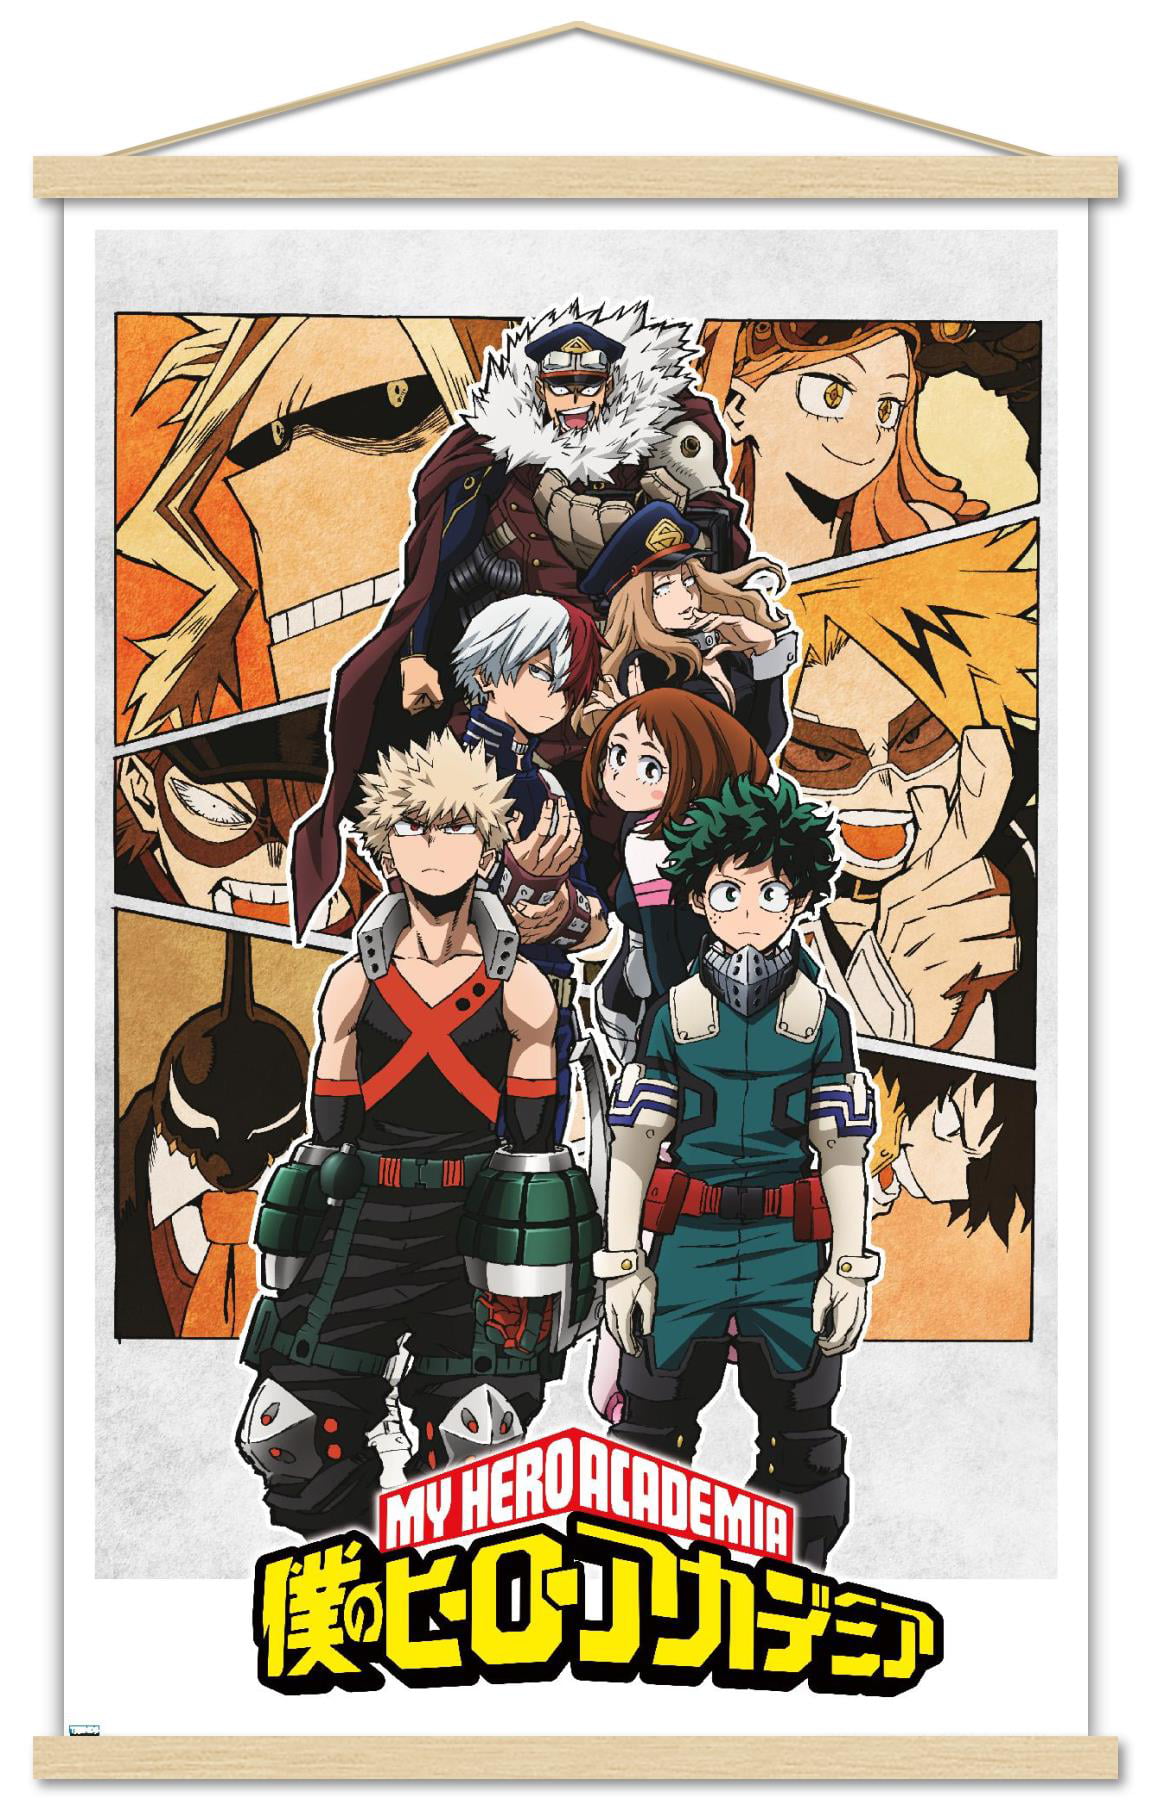 My Hero Academia - Characters Wall Poster, 22.375 x 34 